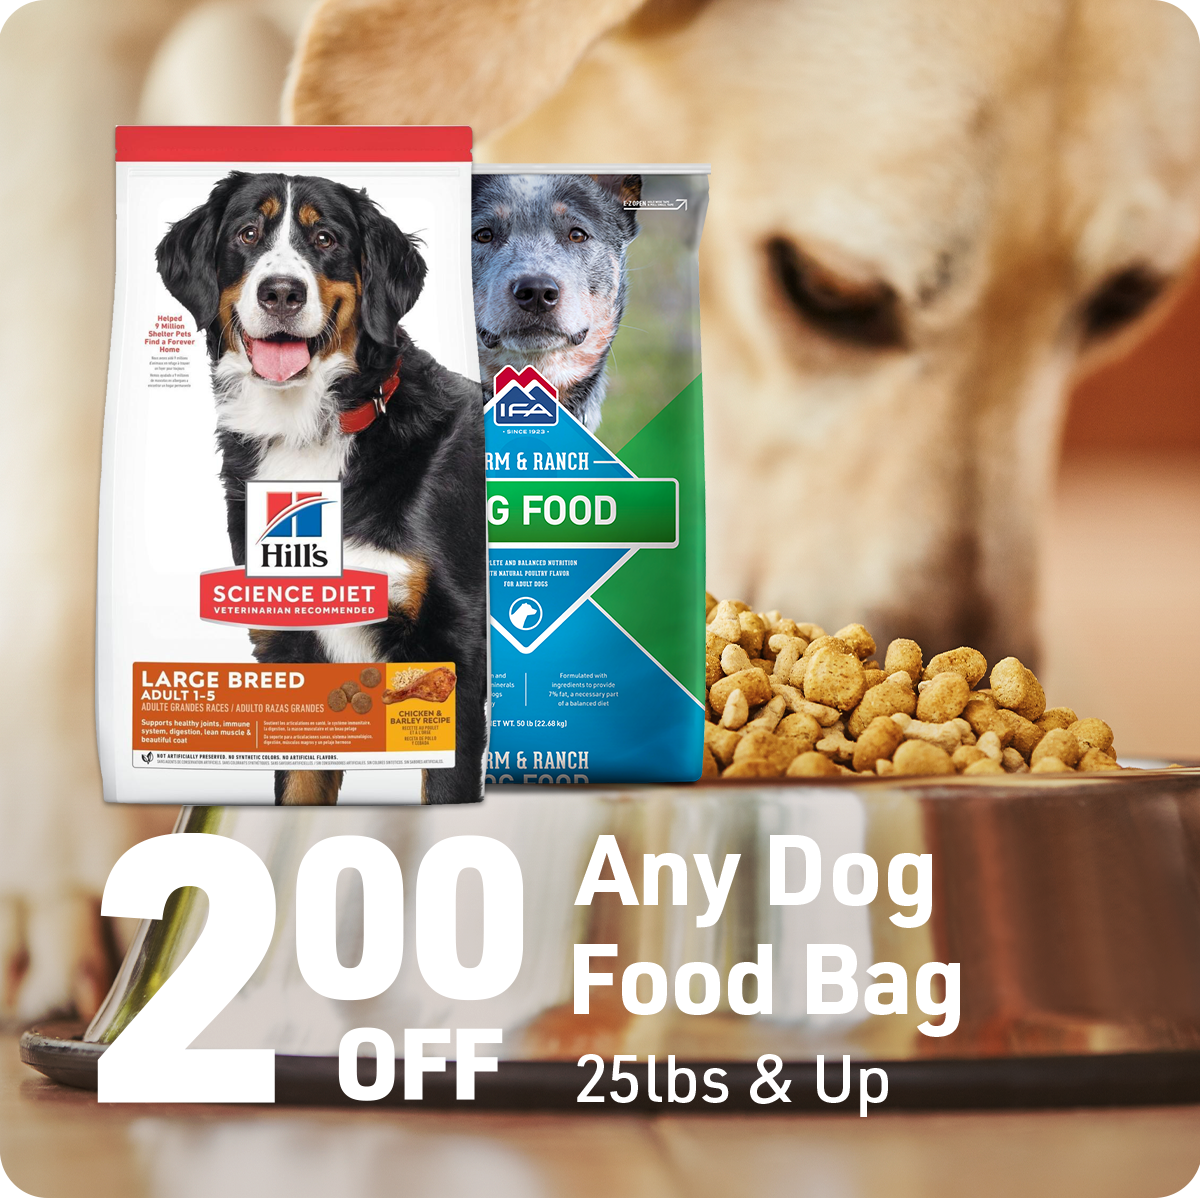 $2 Off Any Dog Food